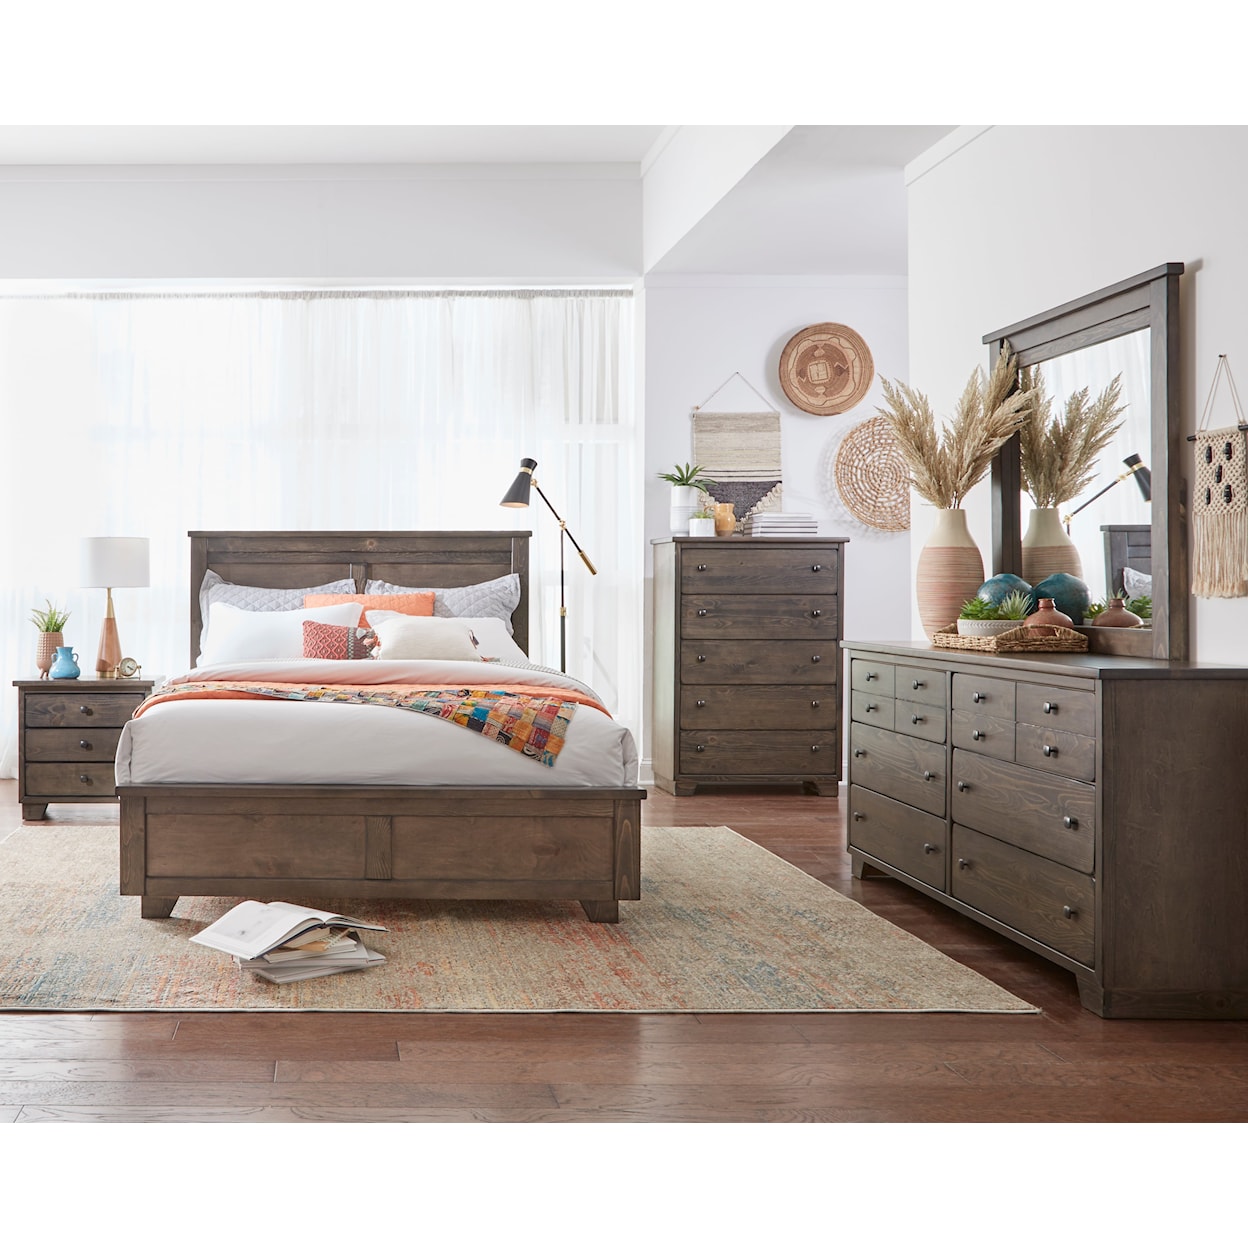 Progressive Furniture River Oaks Dresser & Mirror Set